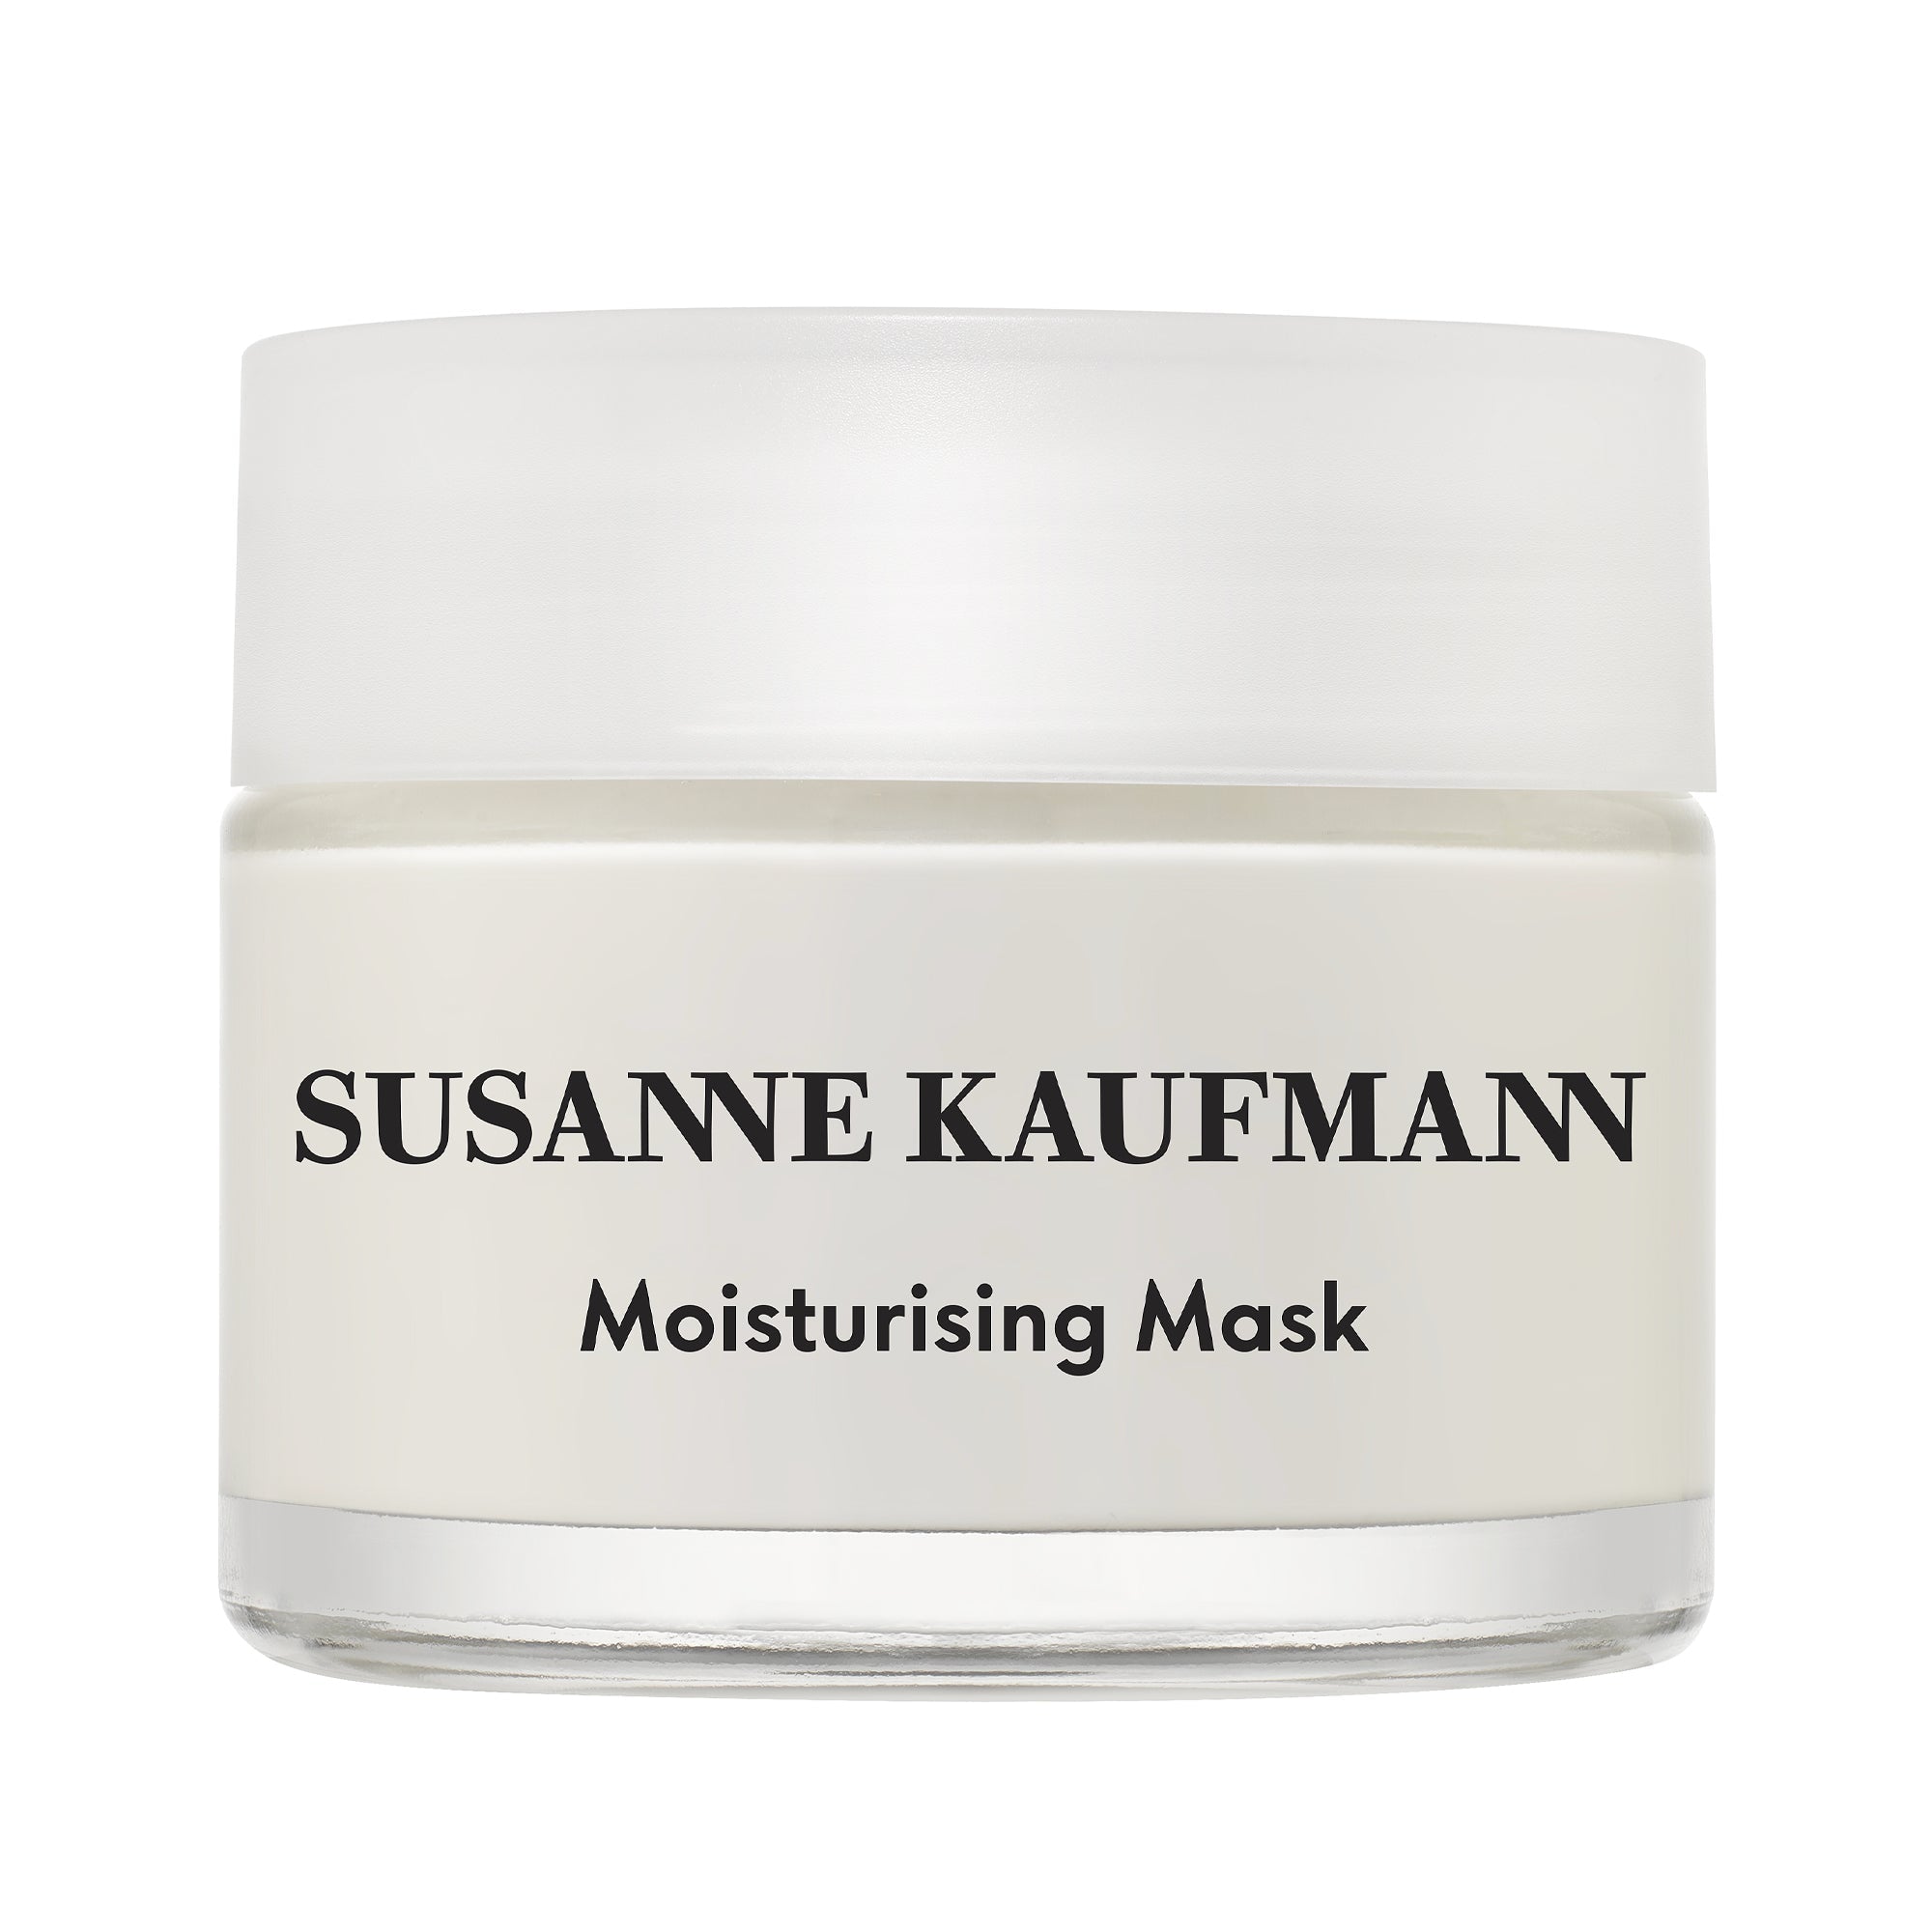 Masque hydratant Moisturising mask Masque hydratant Moisturising mask - Susanne Kaufmann